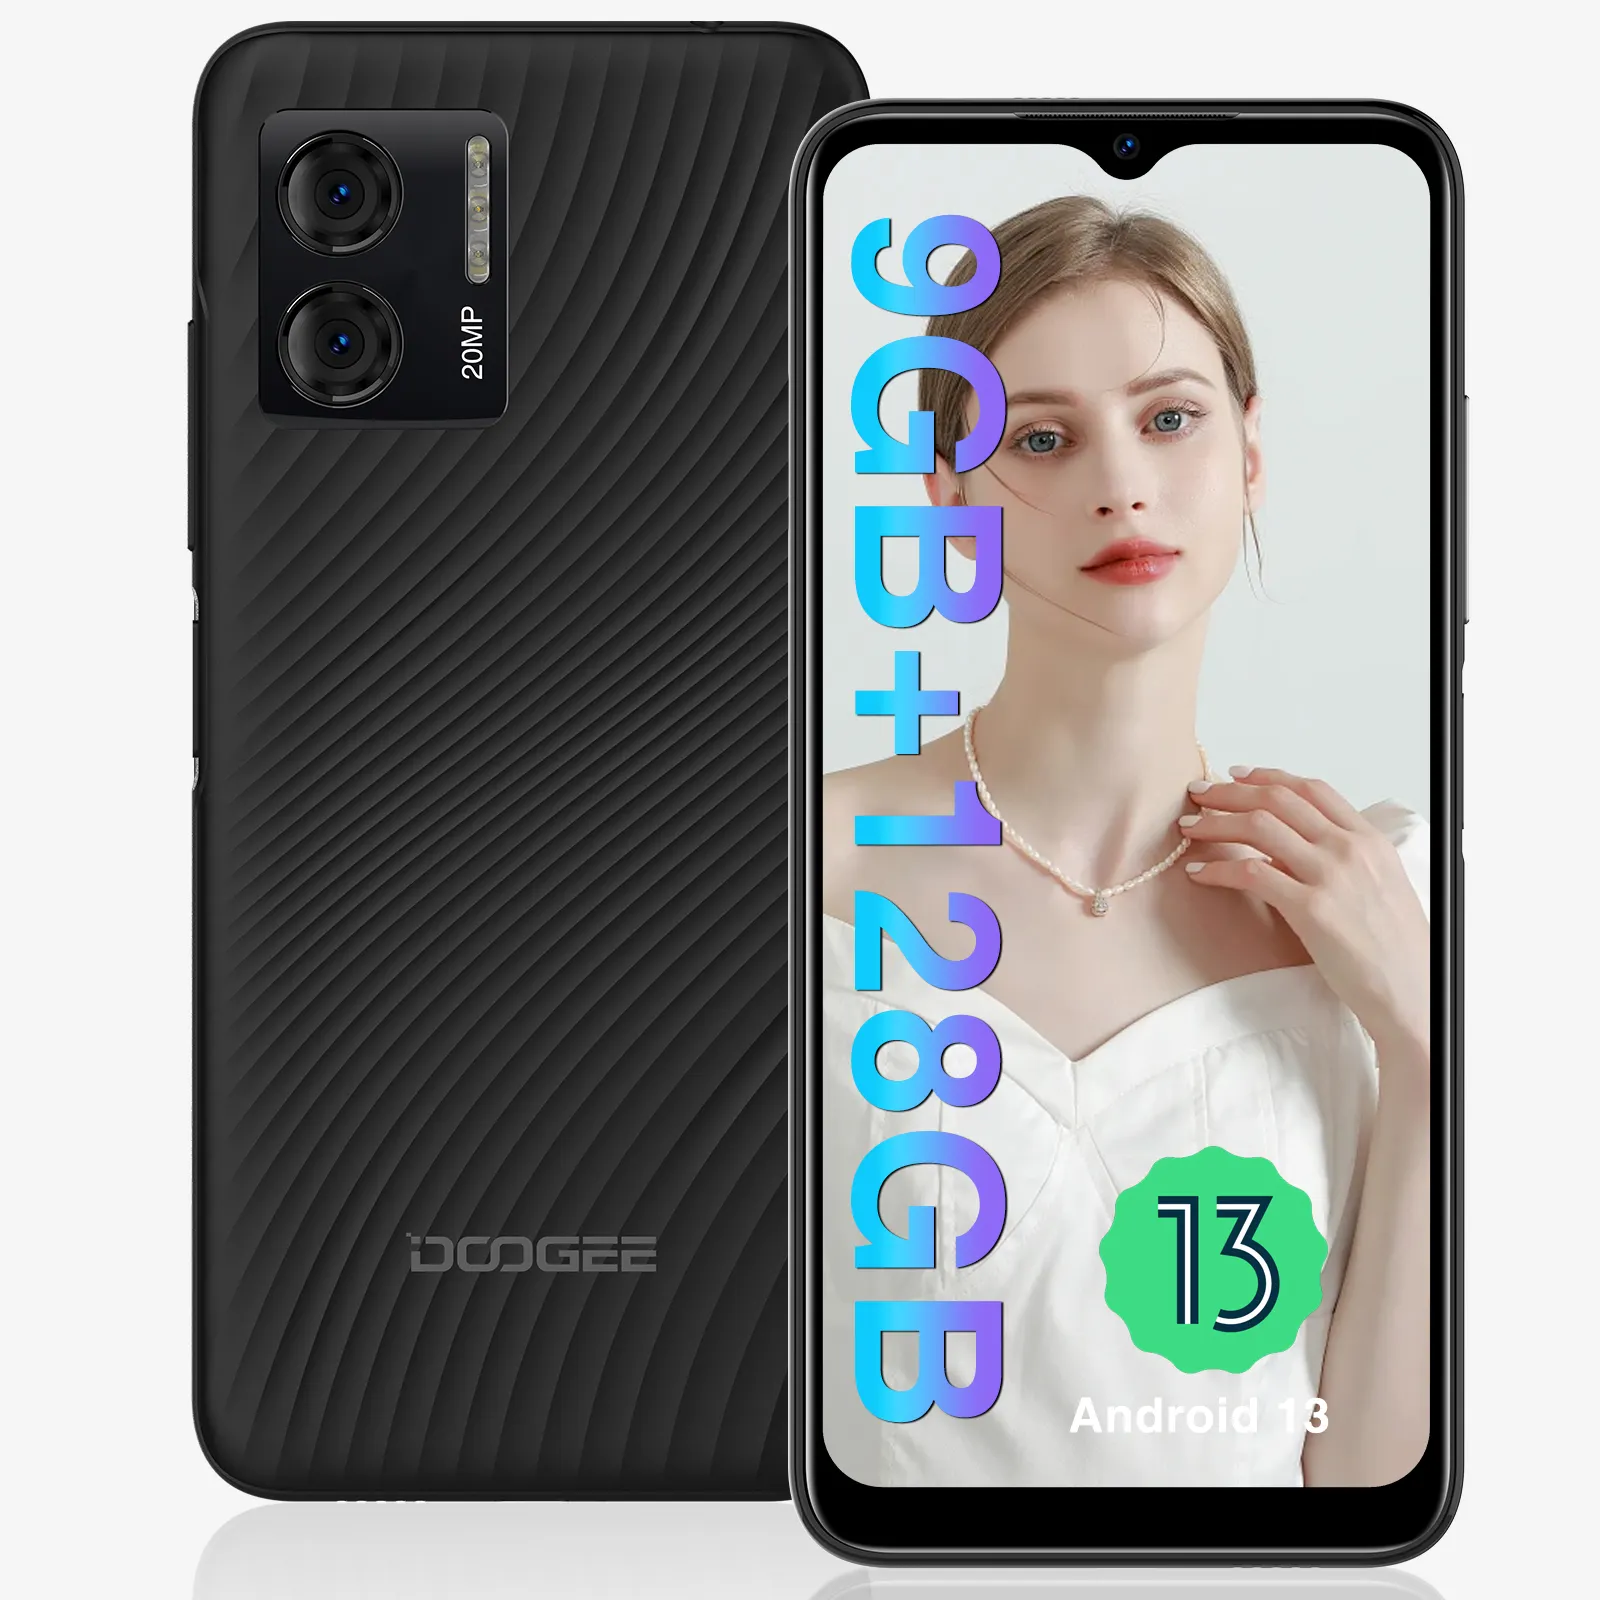 DOOGEE N50S ponsel cerdas Android, ponsel pintar modis 8GB + 128GB dengan fitur Pembuka Kunci pengenalan wajah sidik jari